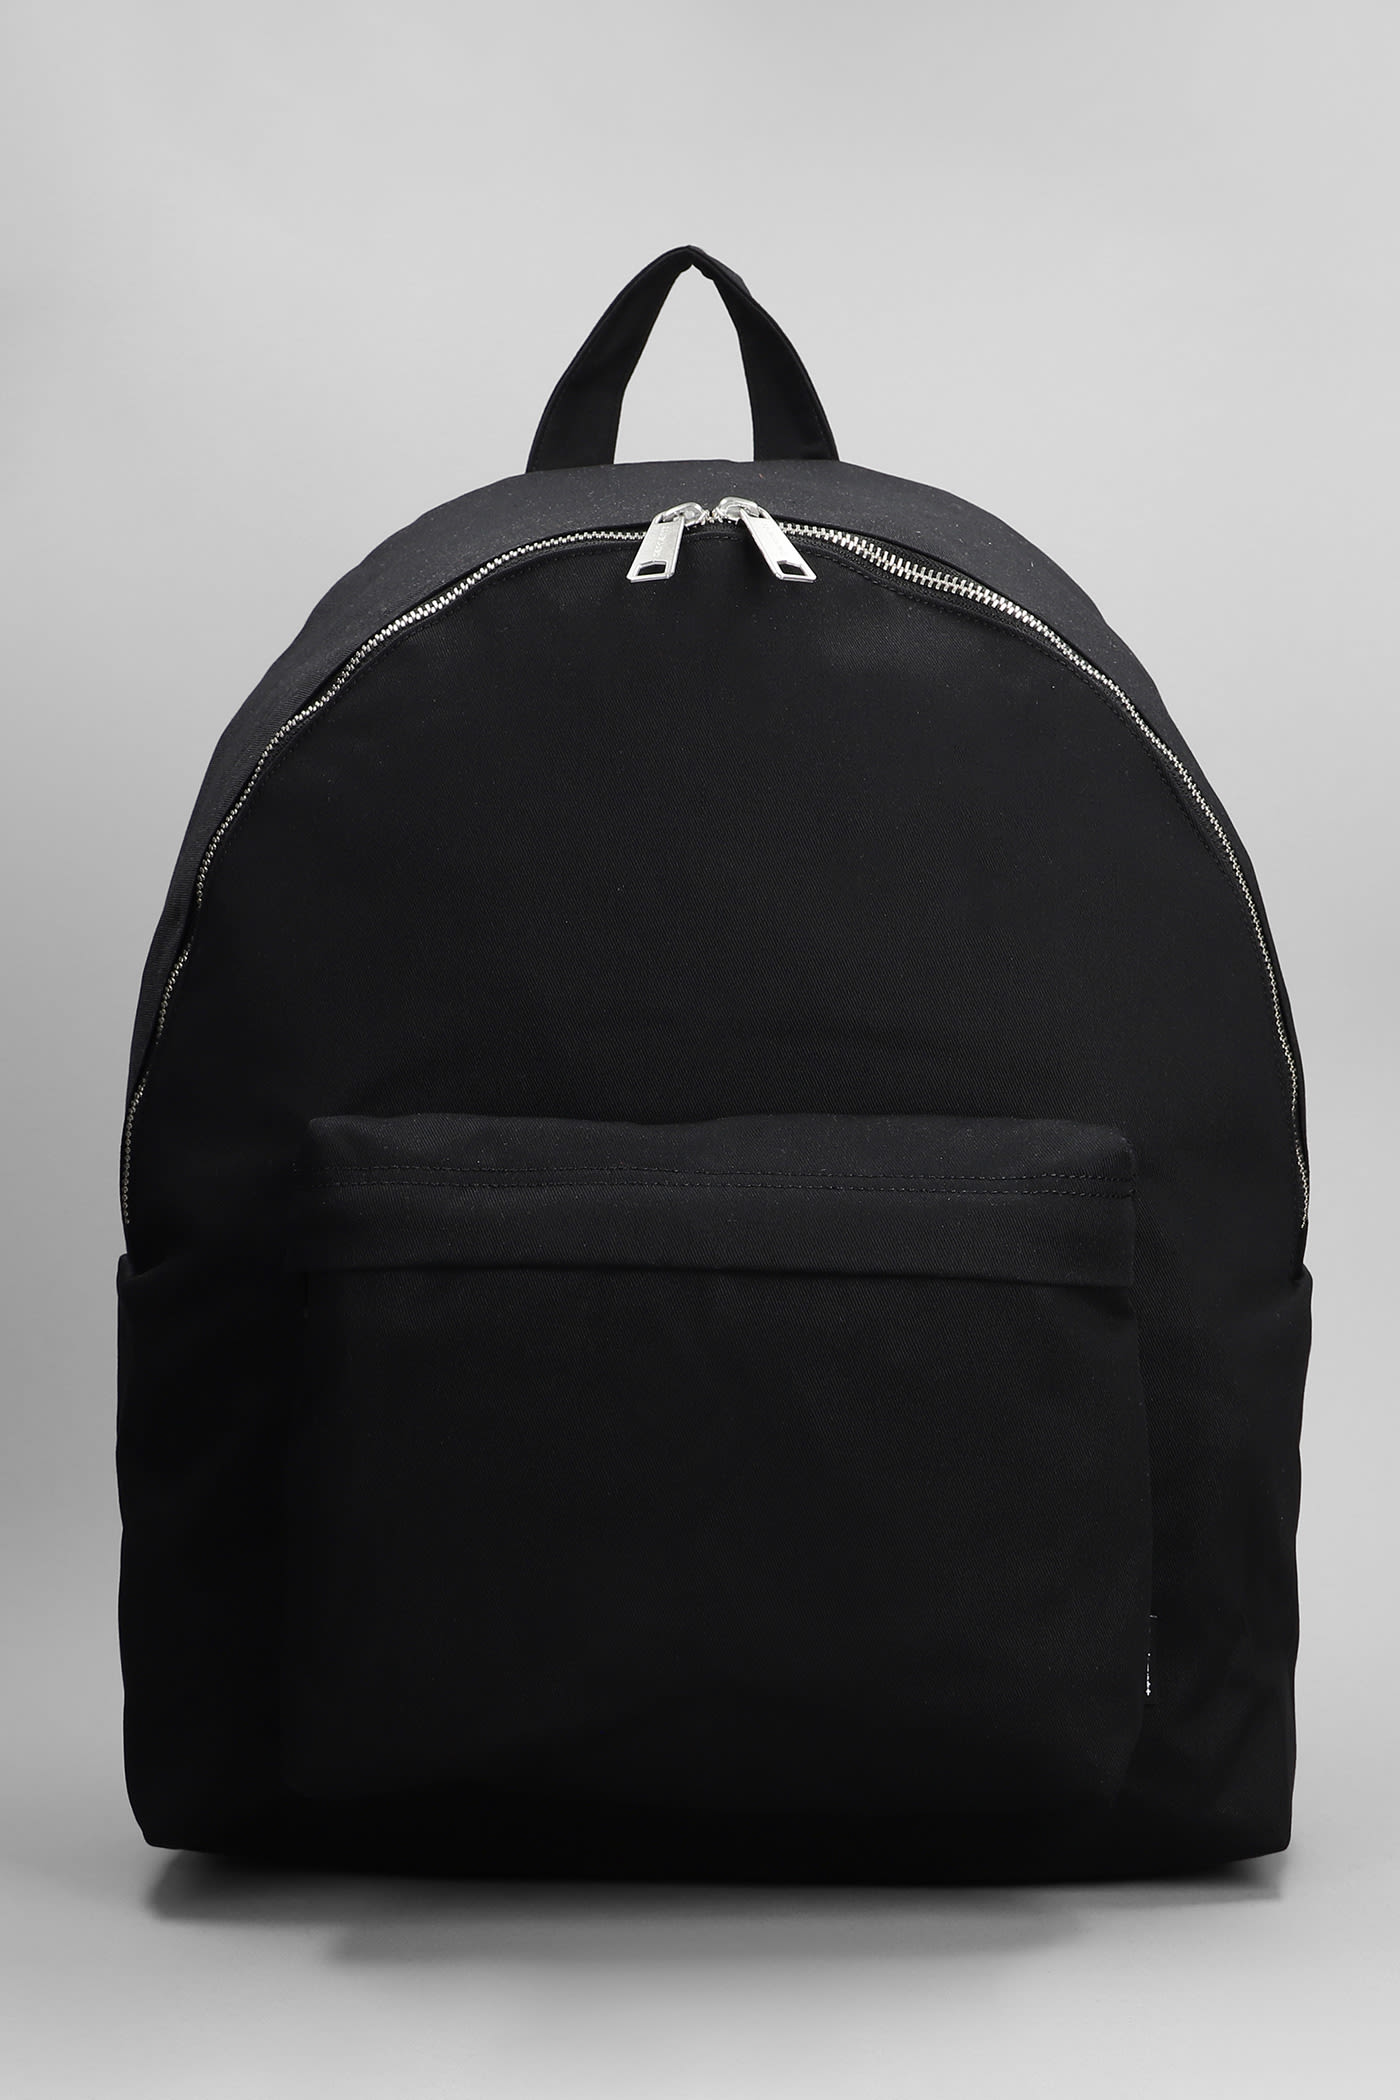 Carhartt Backpack In Black Polyester